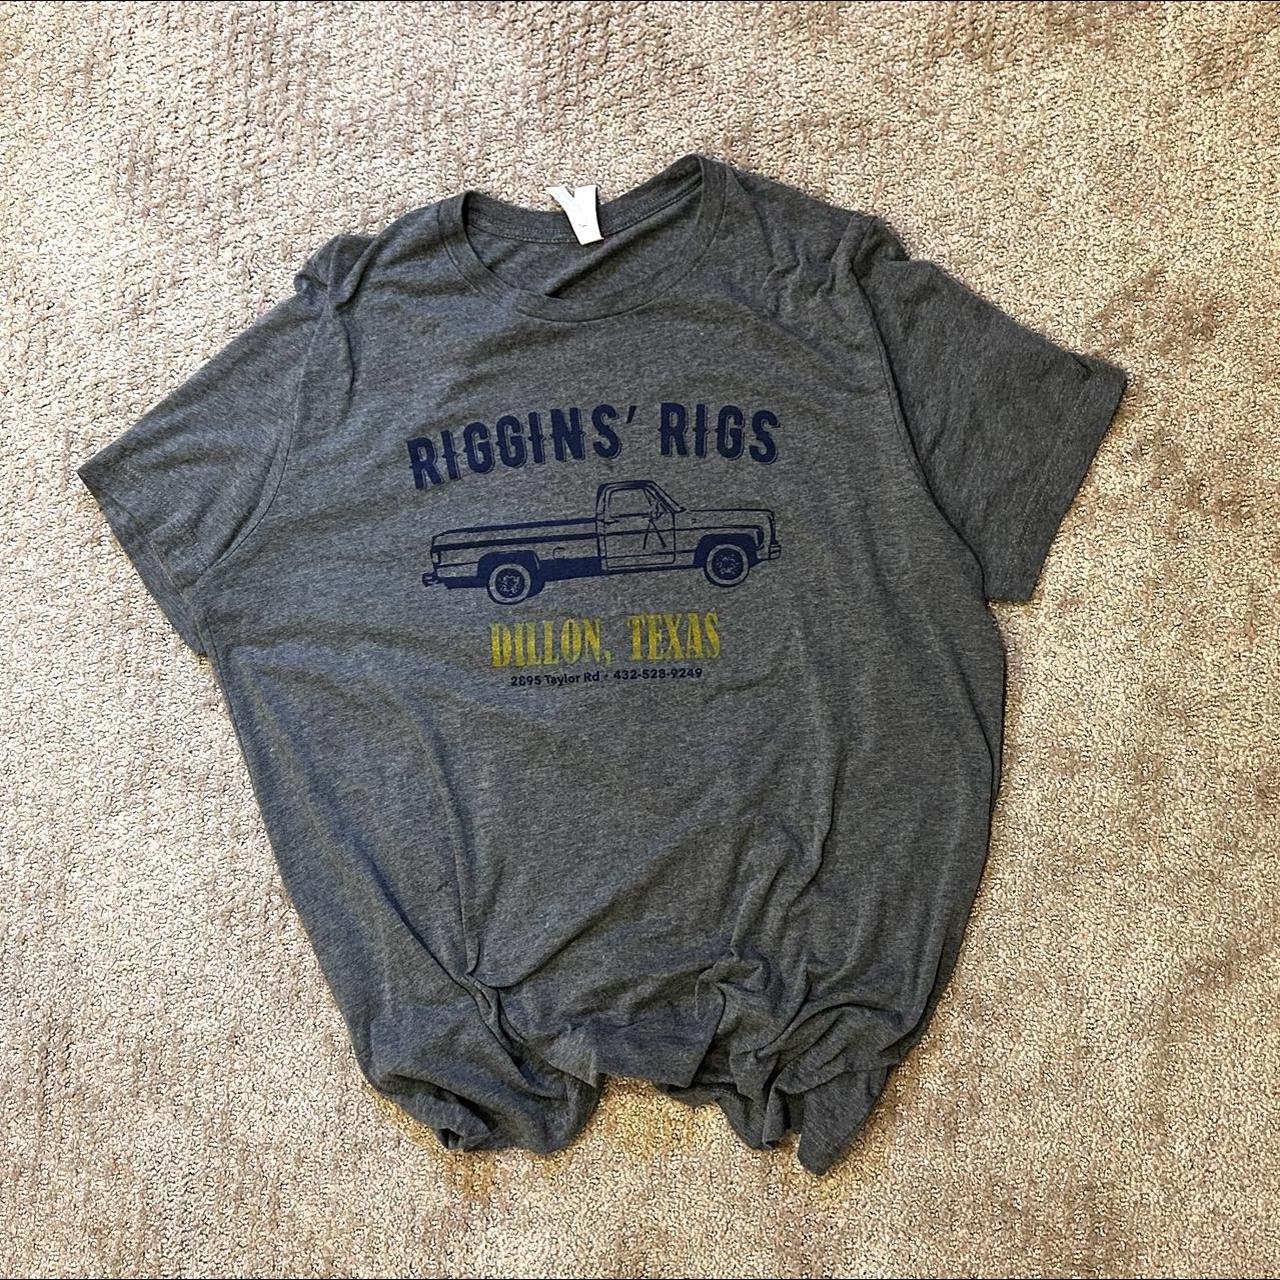 Riggins rigs Dillon, Texas vintage shirt #vintage... - Depop